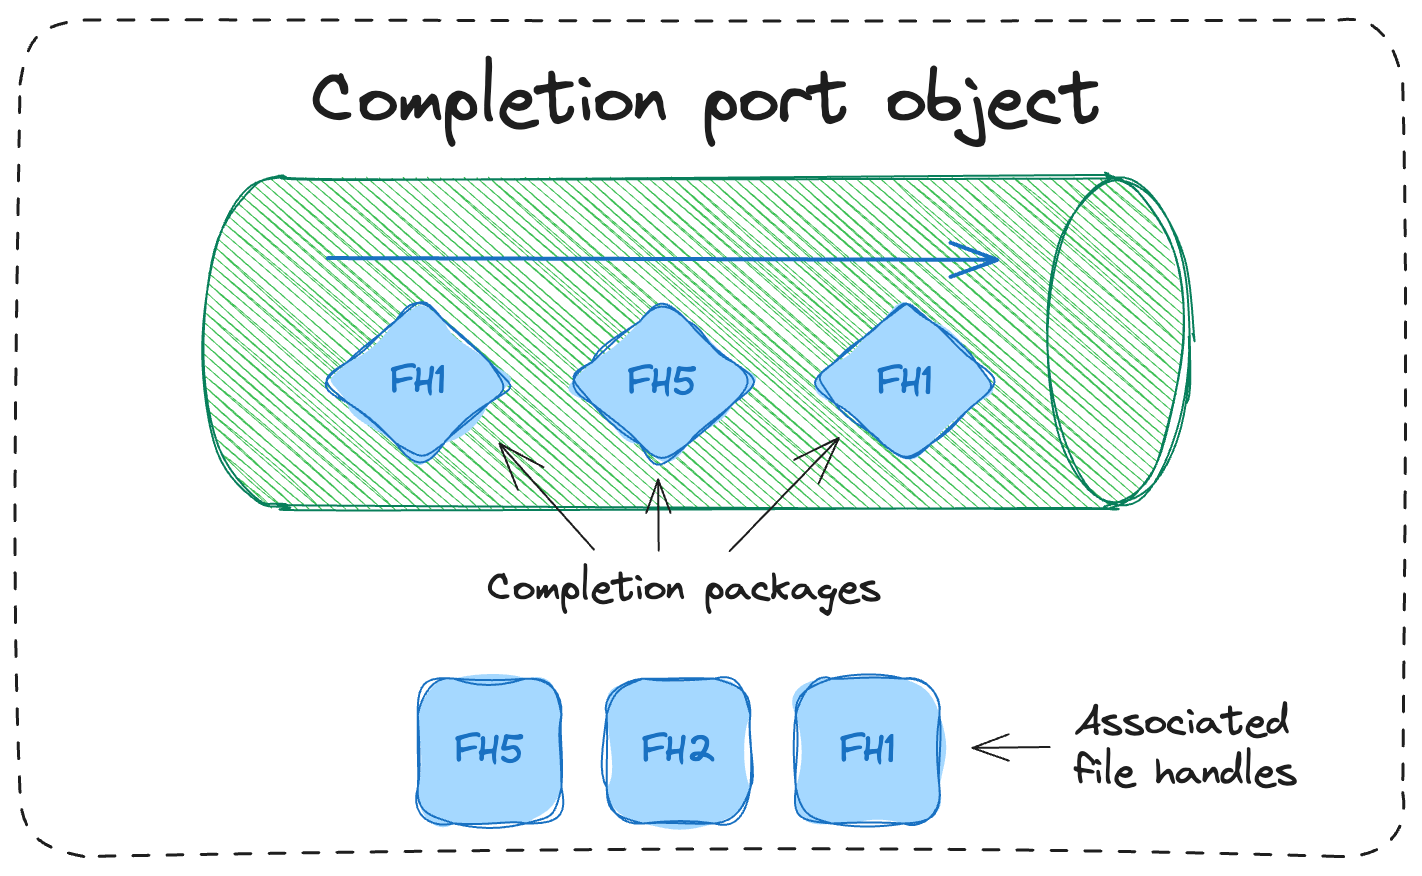 Completion port representation